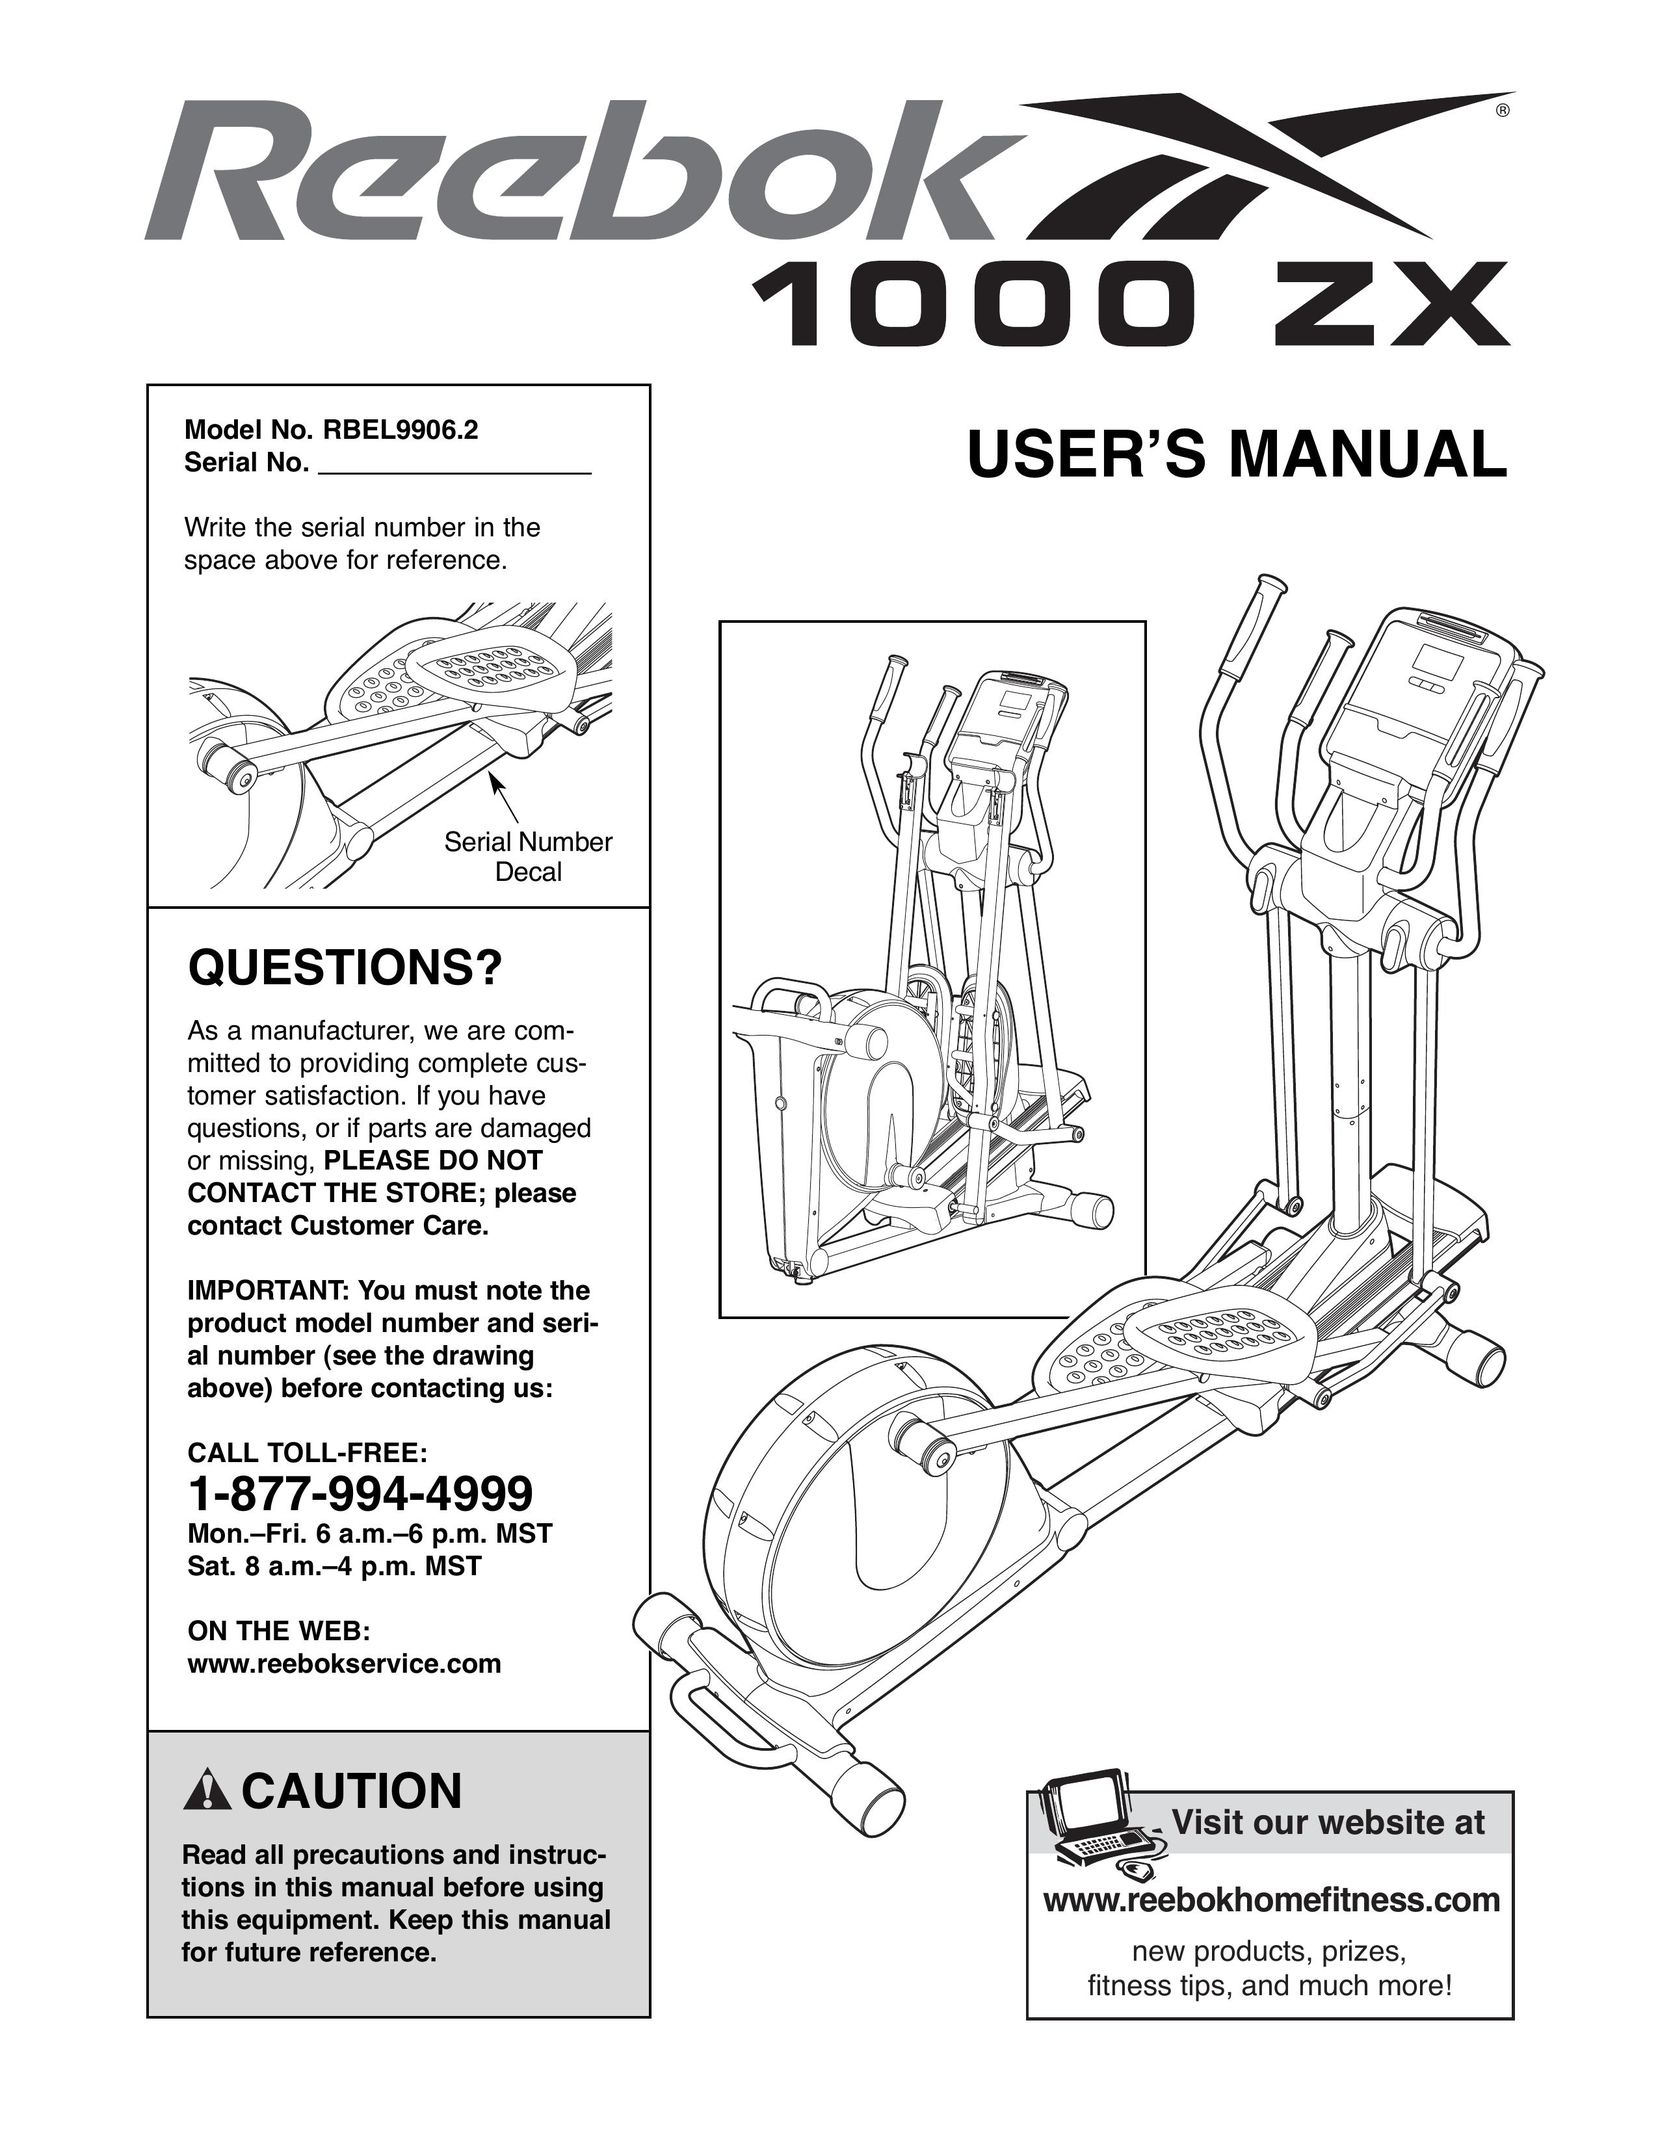 Reebok Fitness RBEL9906.2 Home Gym User Manual